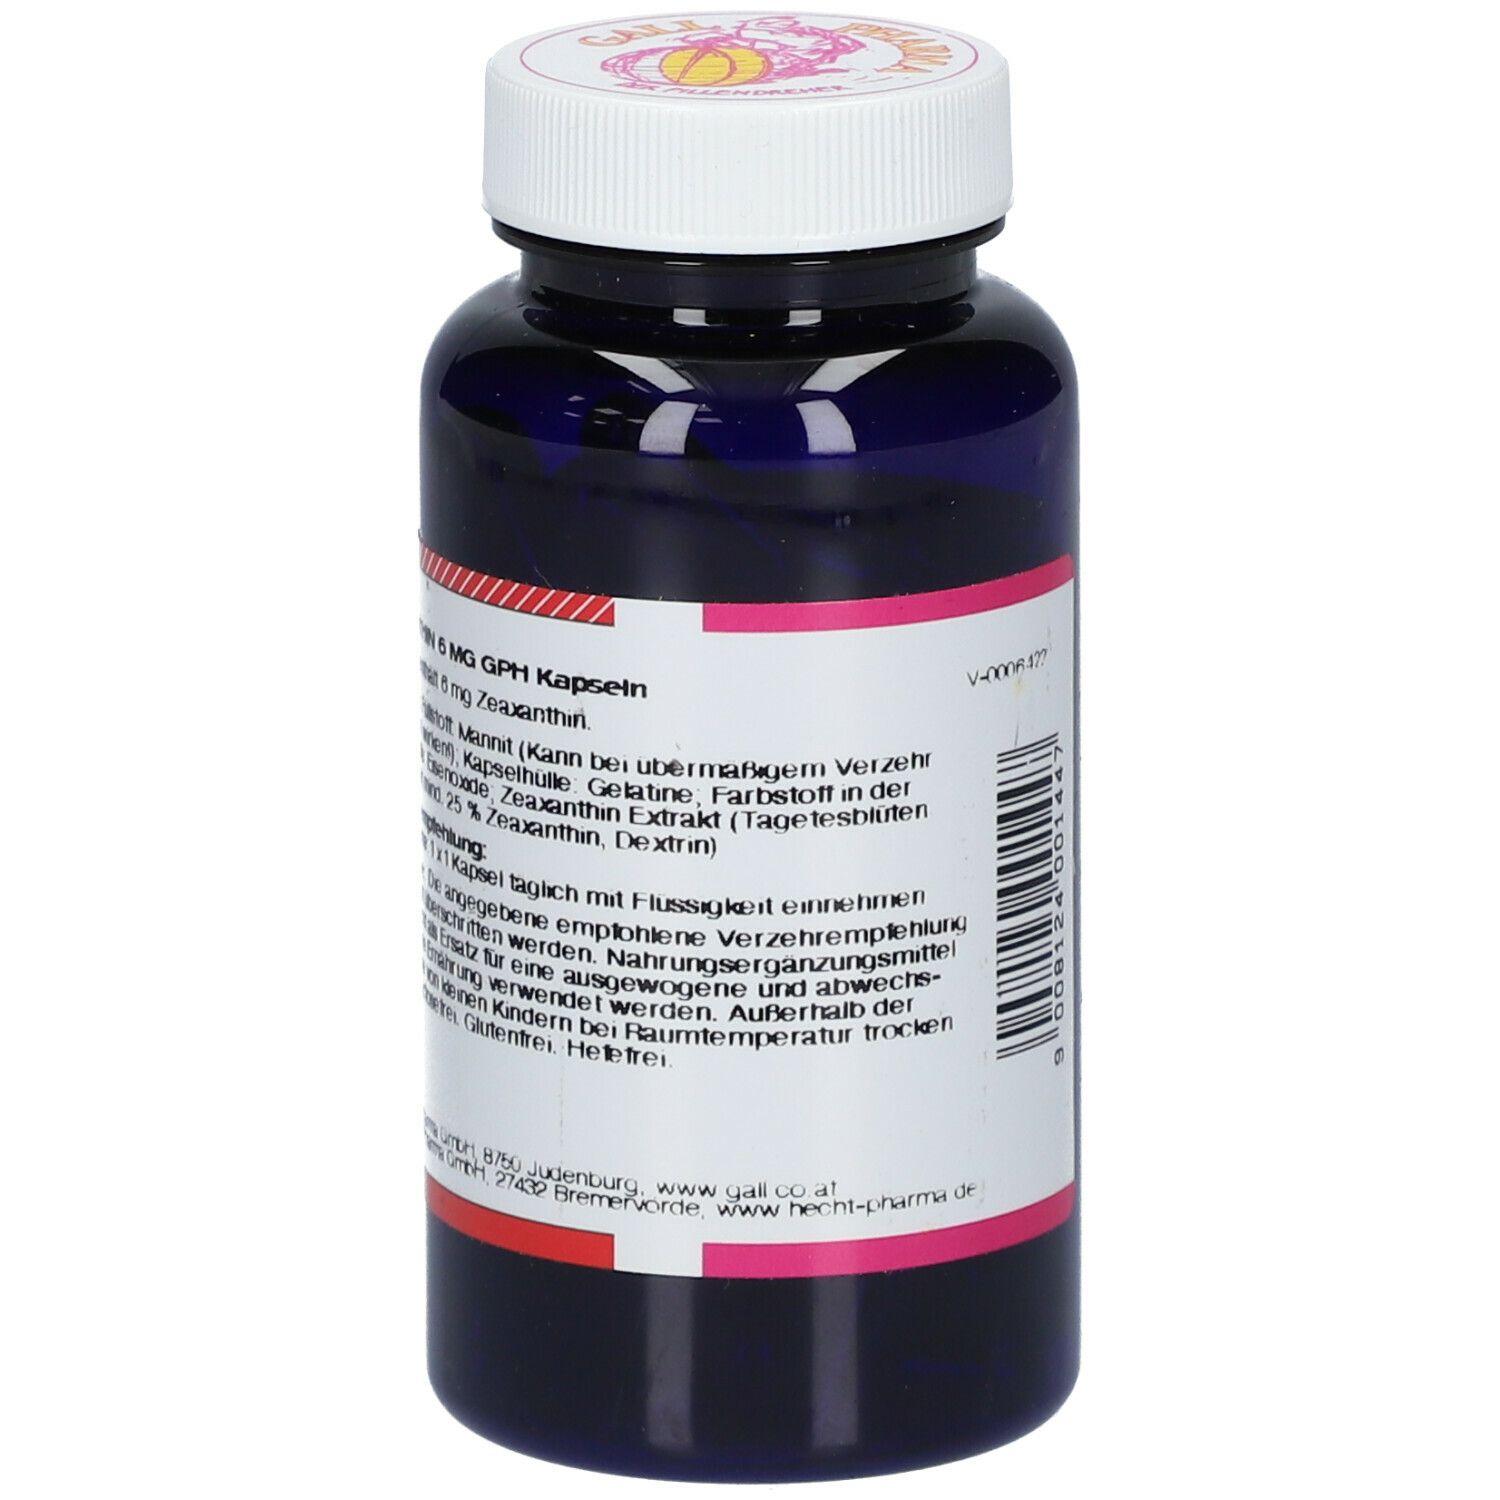 GALL PHARMA Zeaxanthin 6 mg GPH Kapseln